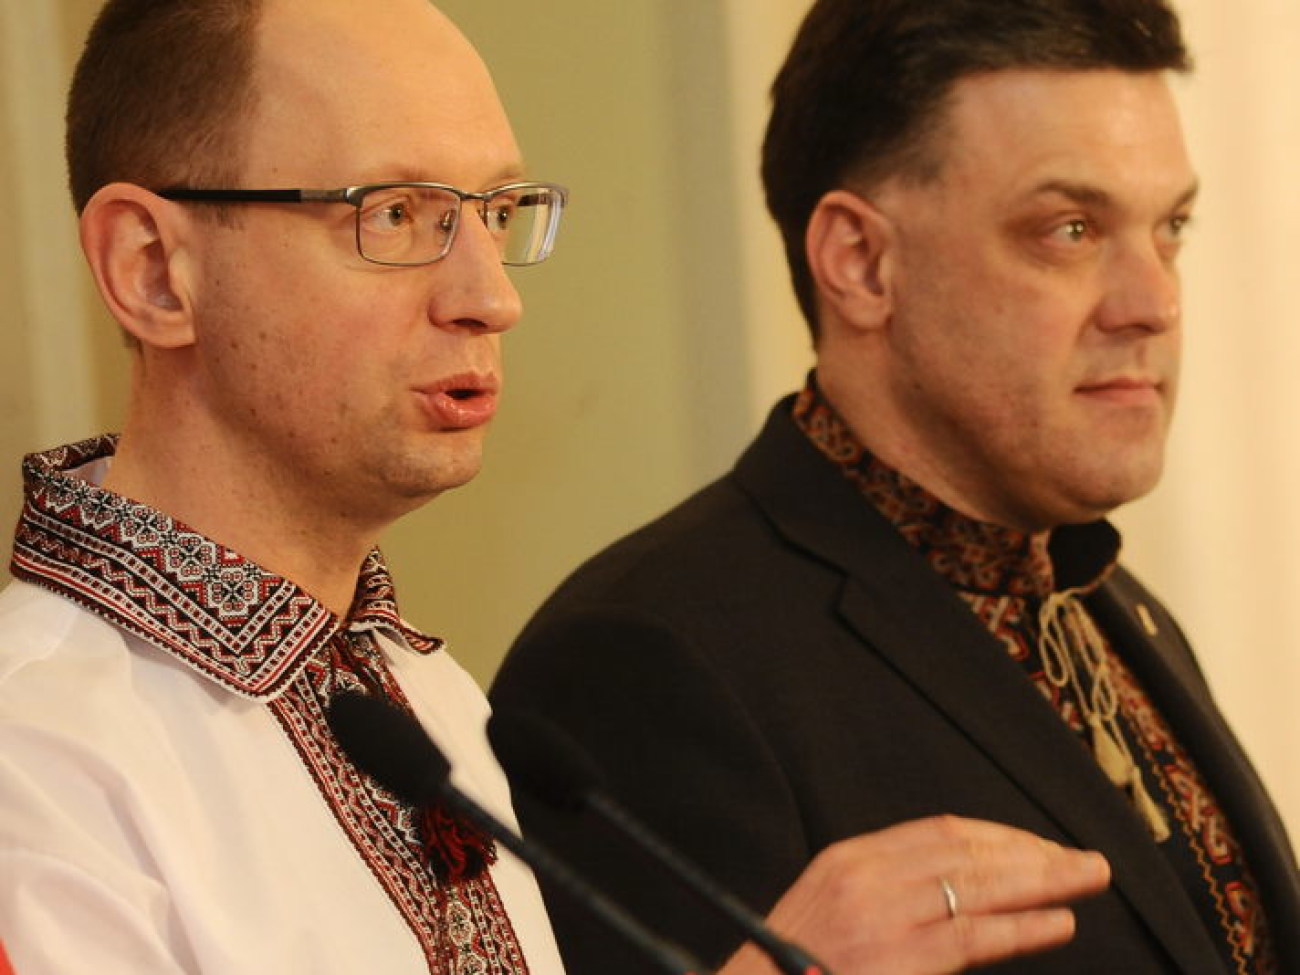 Кличко, Яценюк и Тягнибок во время брифинга в парламенте, 19 февраля 2013г.